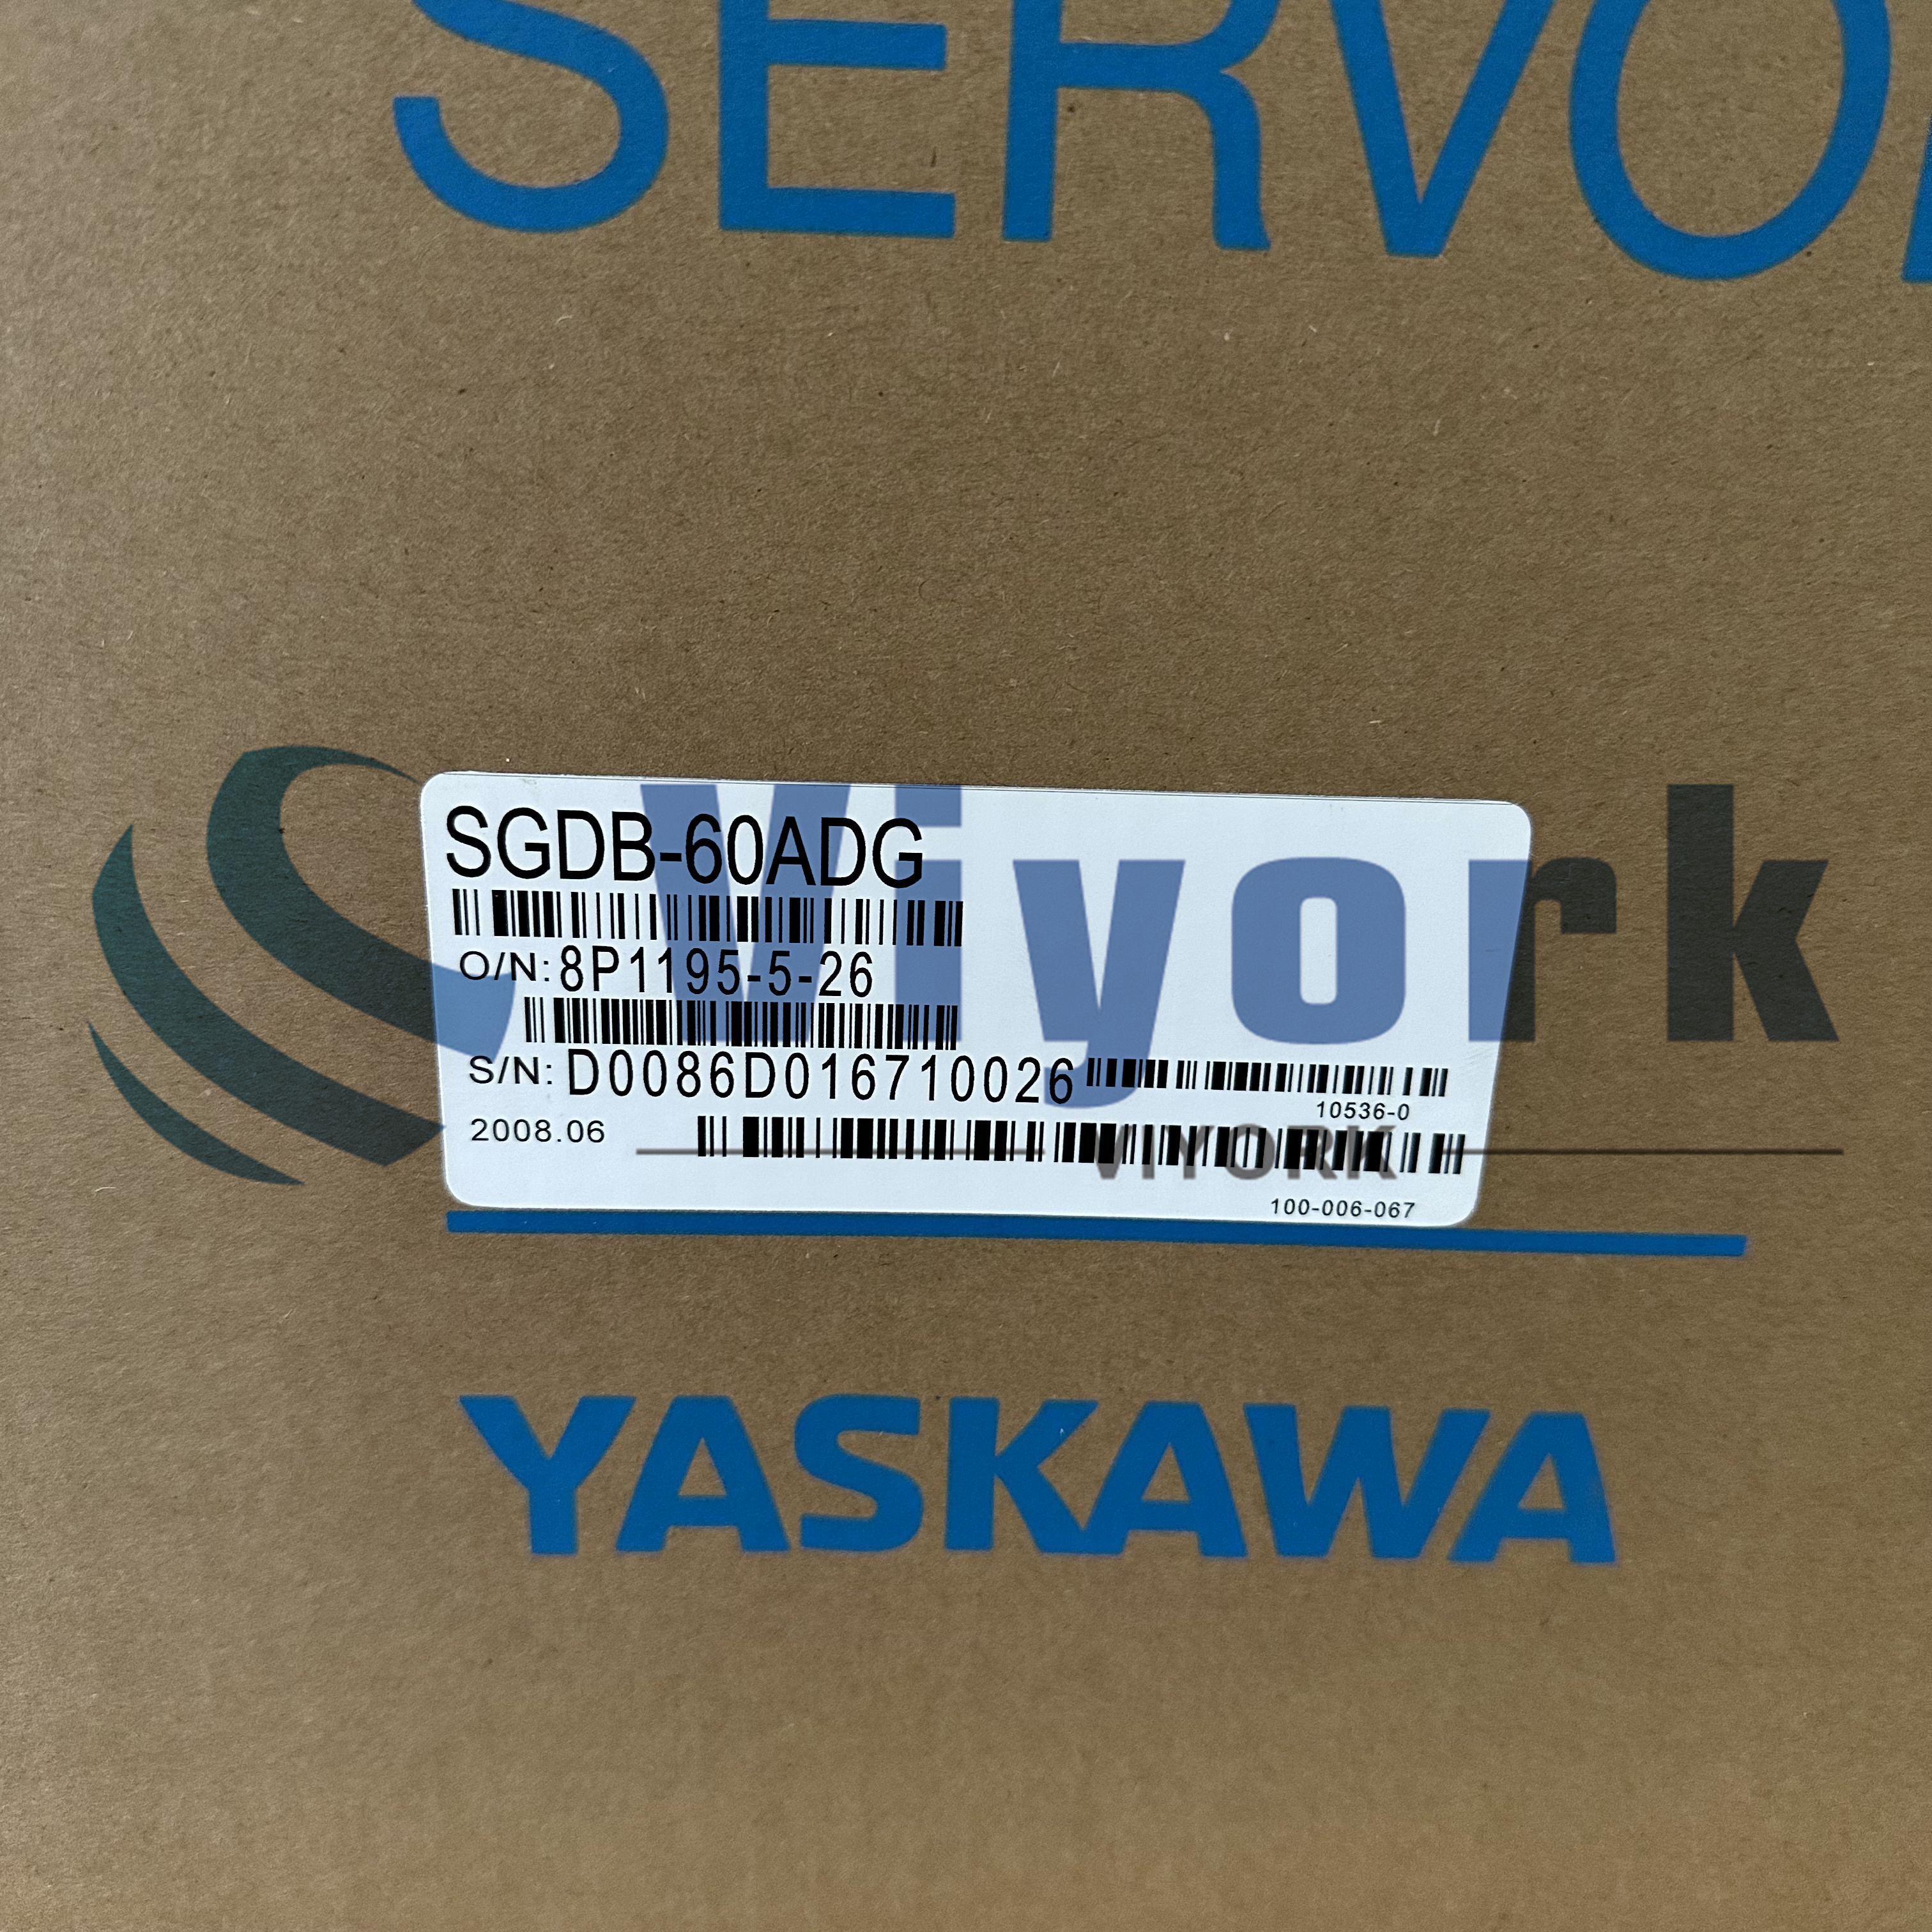 Yaskawa drive maintenance alarm list, server fault code list